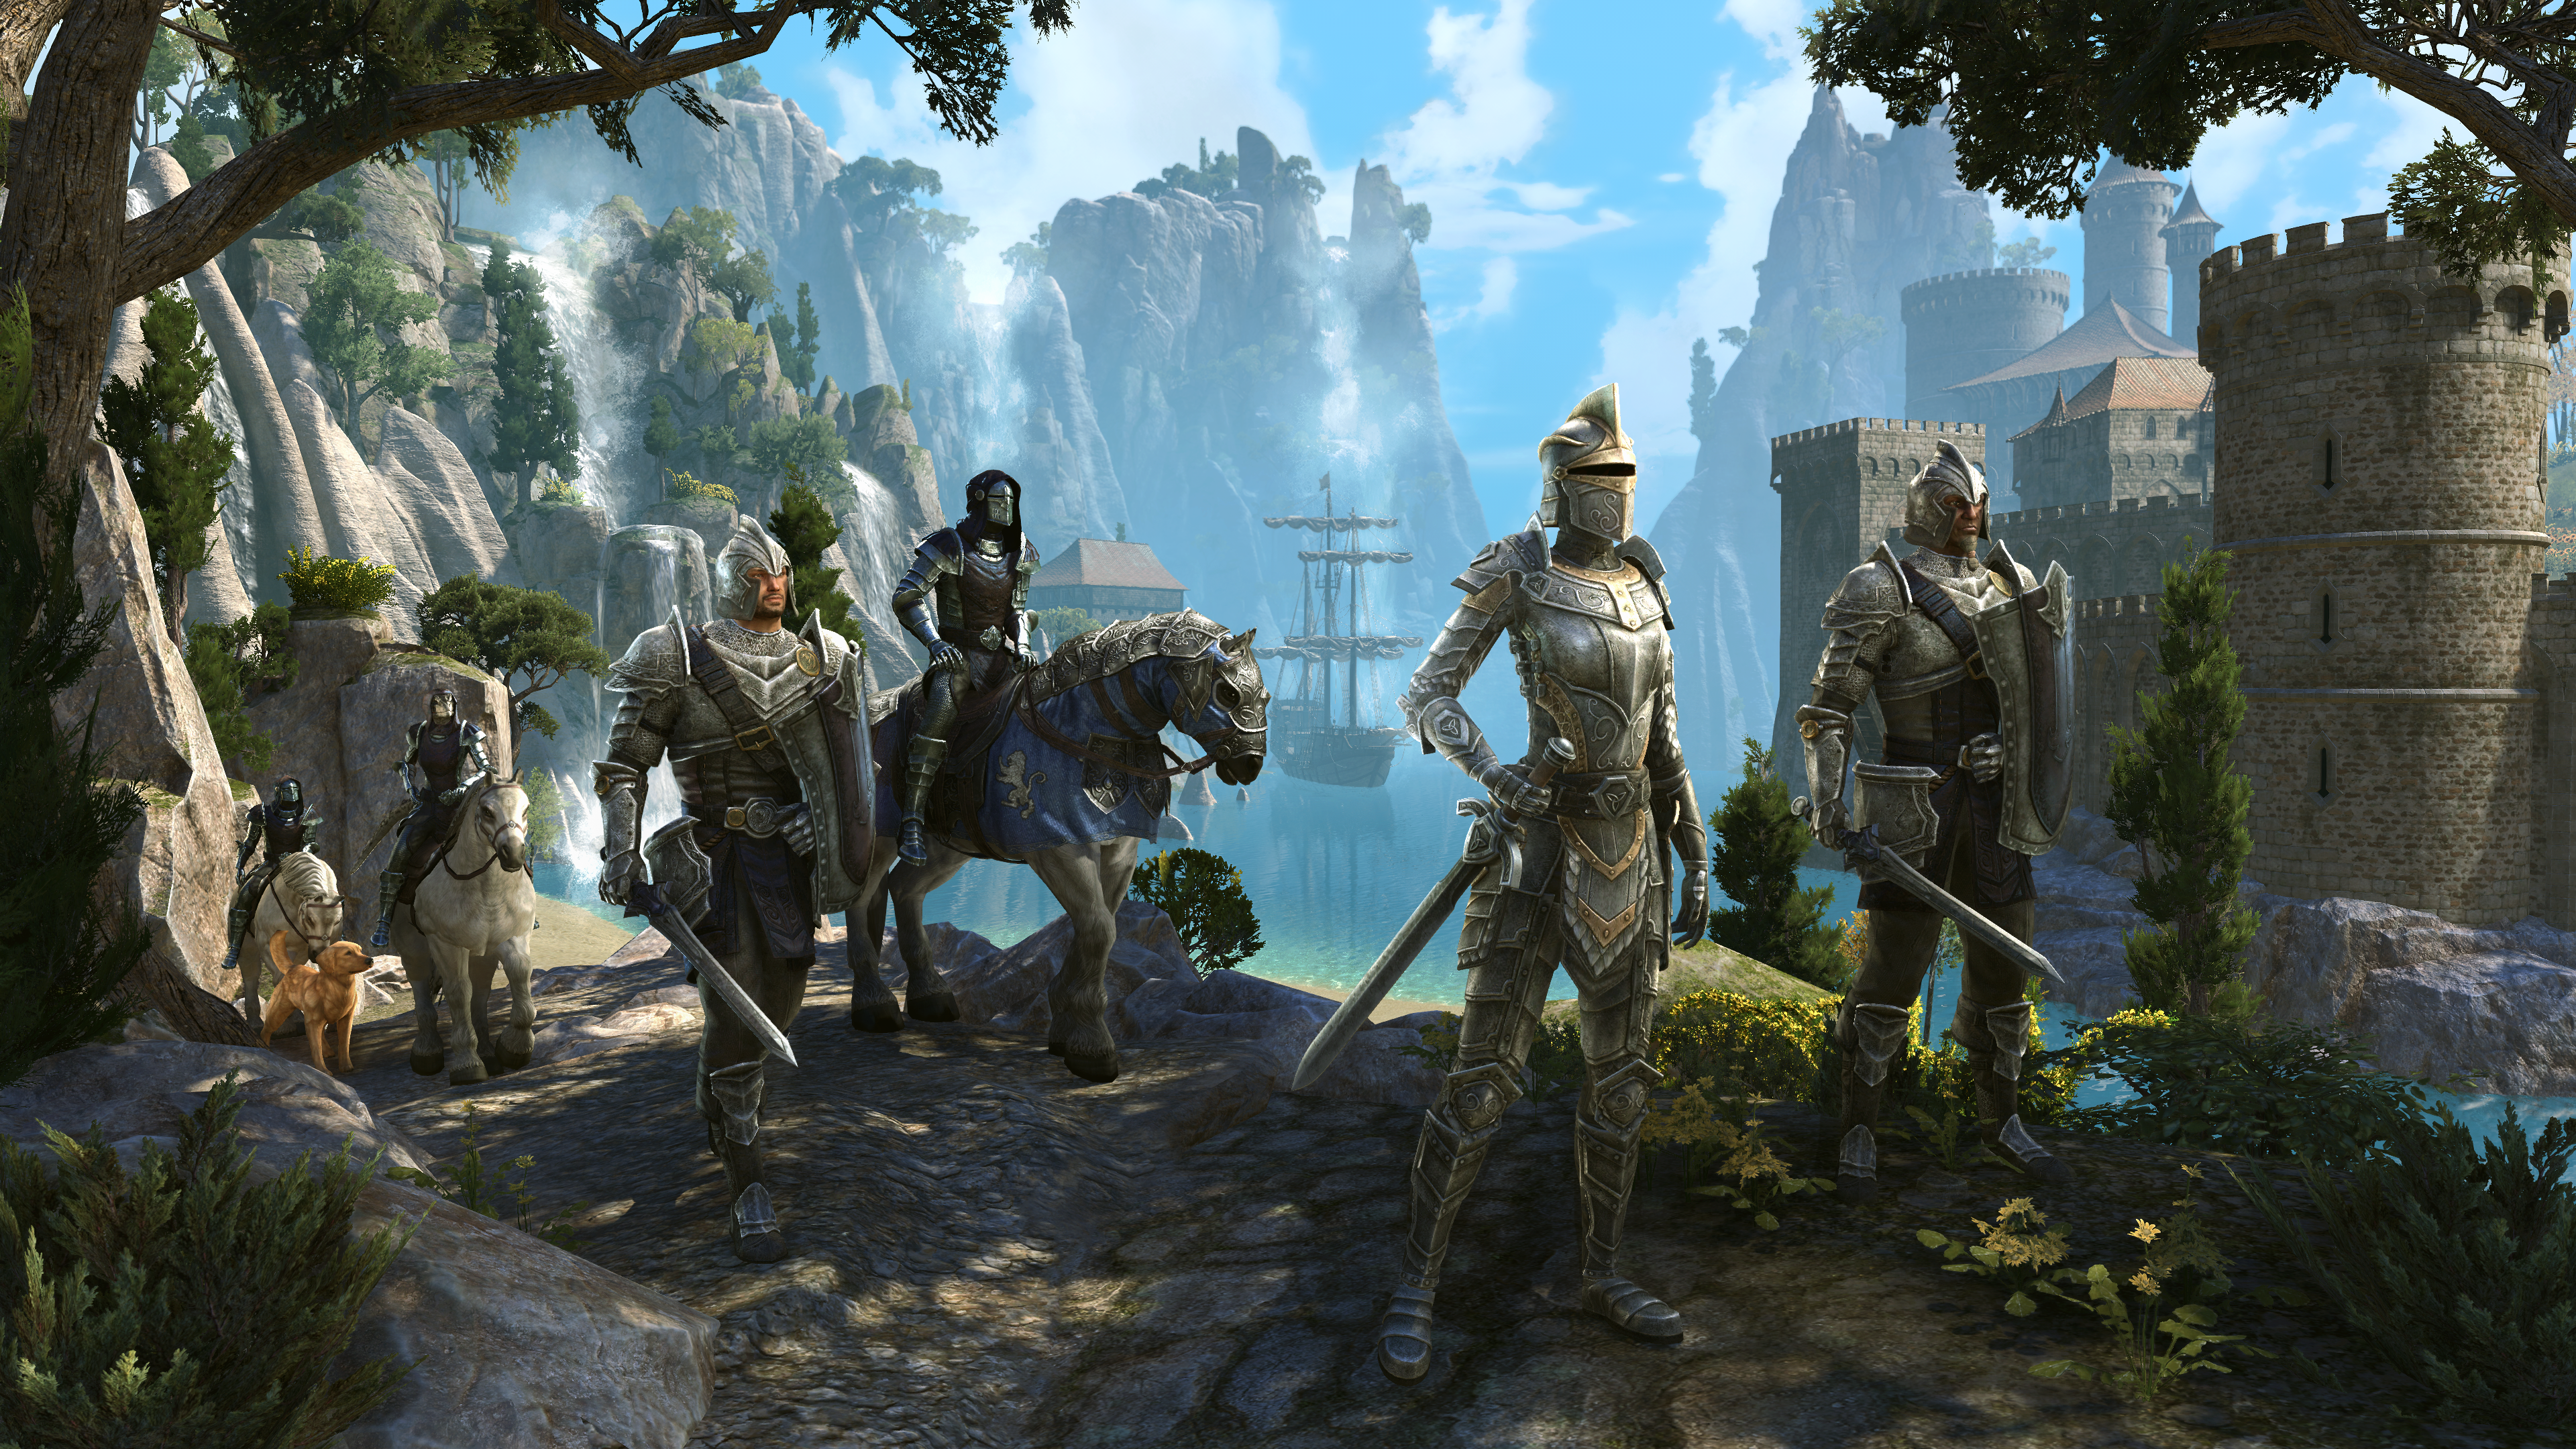 The Elder Scrolls® Online High Isle™  Upgrade